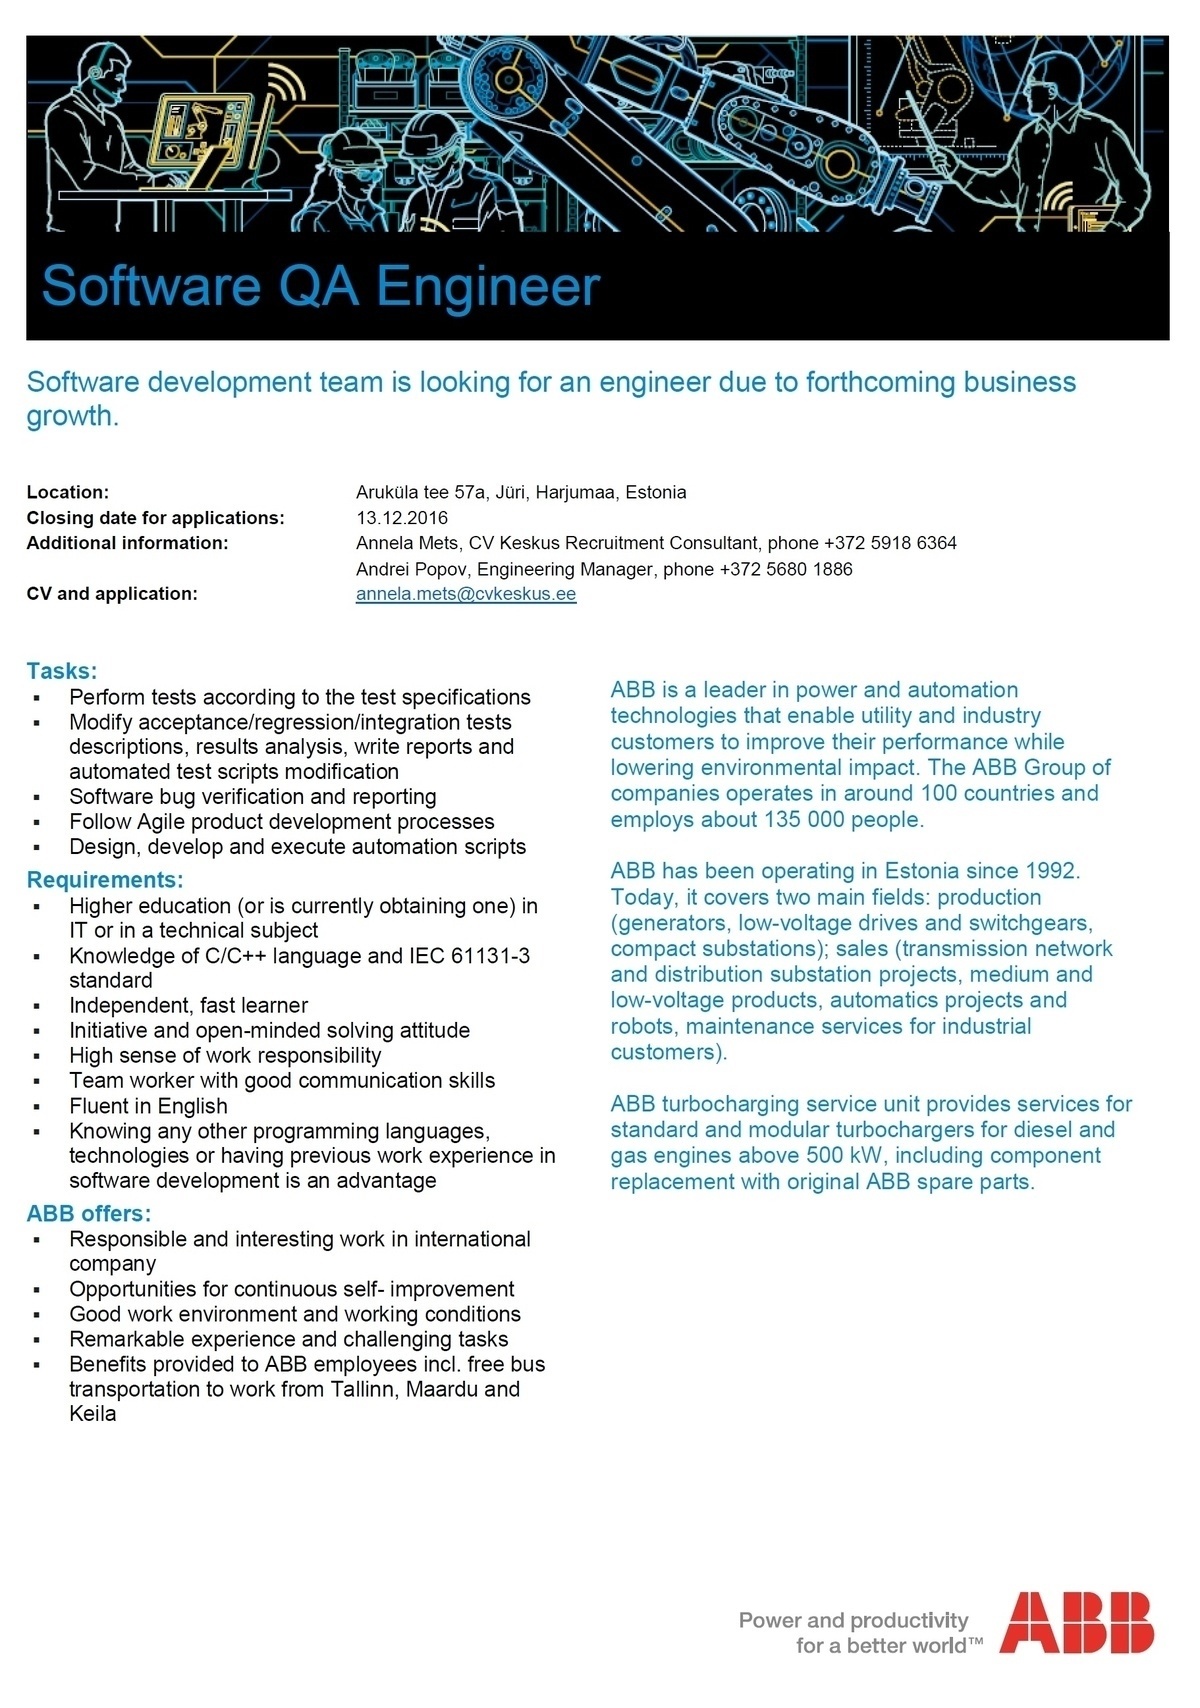 CV KESKUS OÜ ABB is looking for a Software QA Engineer